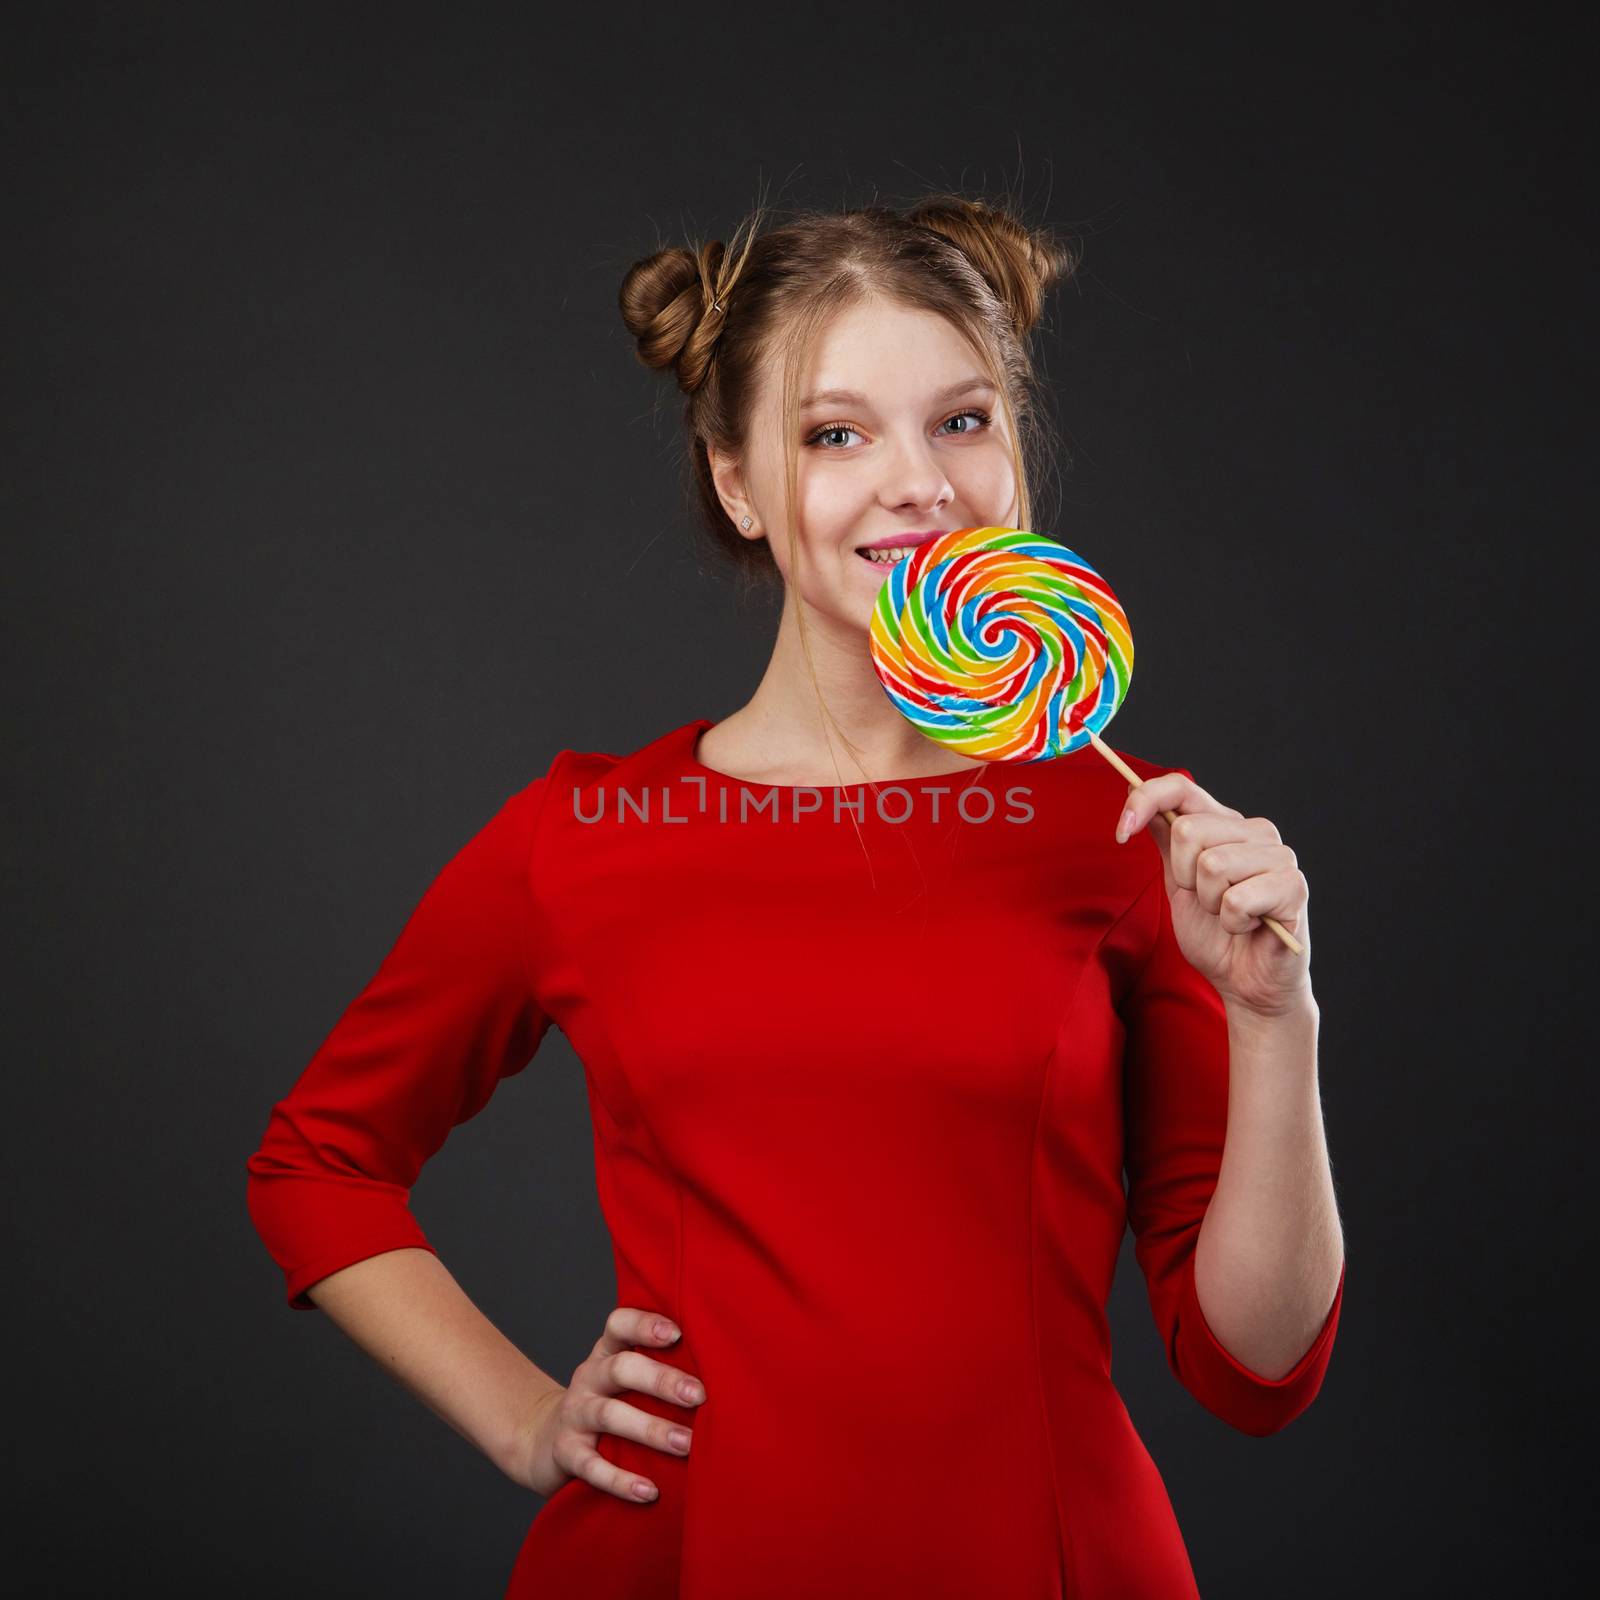 Funny girl with a lollipop by natazhekova